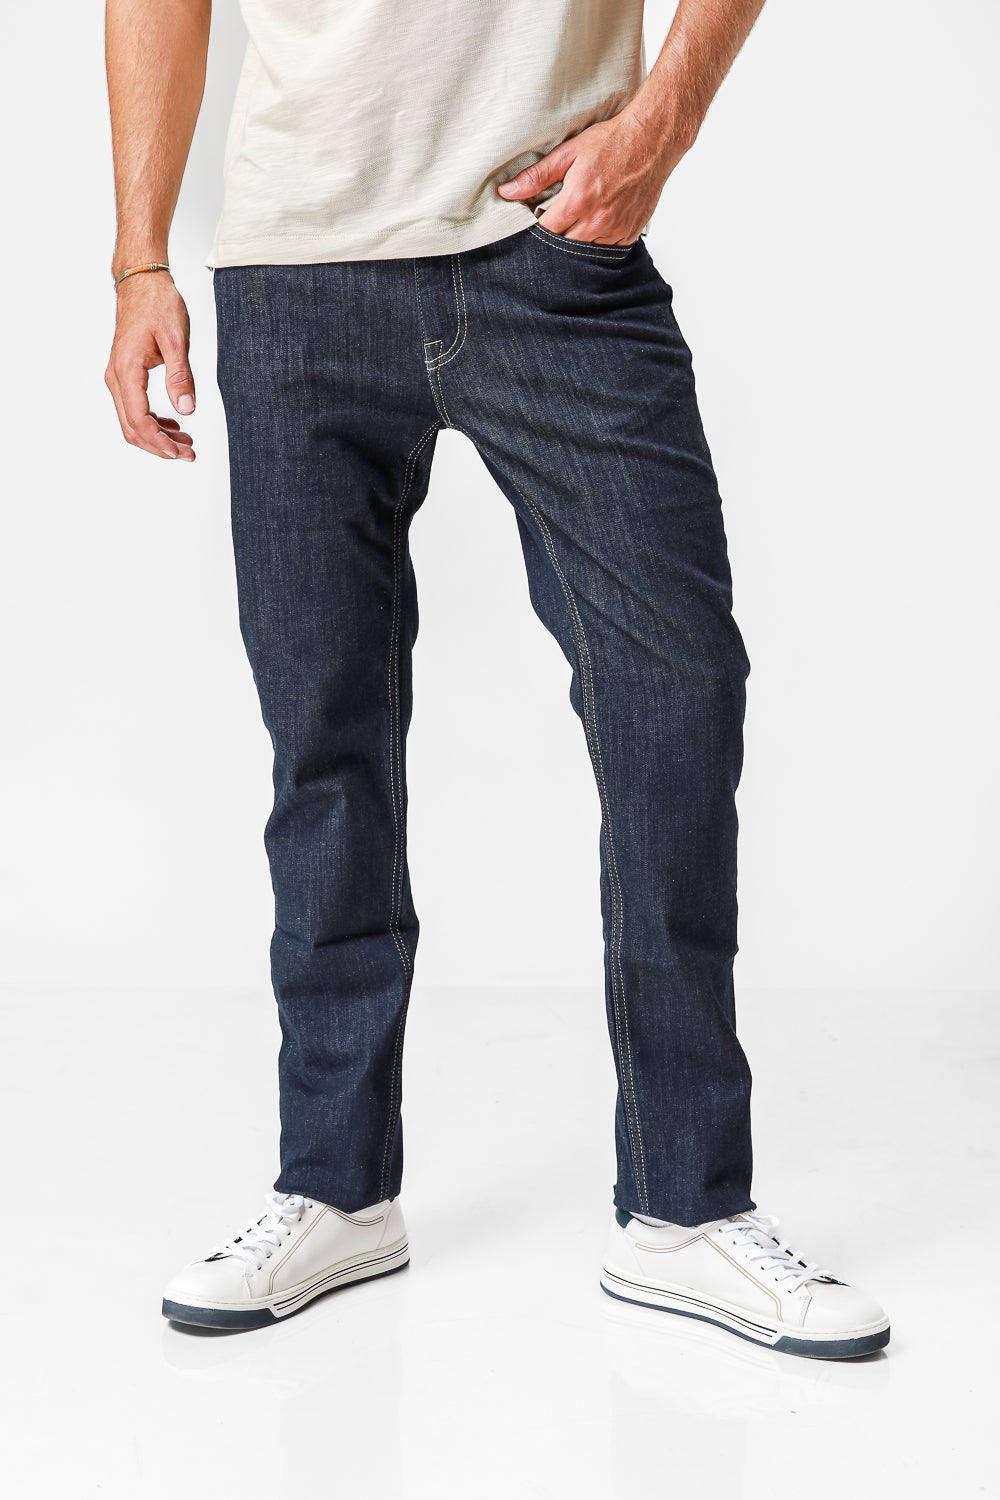 KENNETH COLE - ג'ינס סקיני כחול כהה - MASHBIR//365